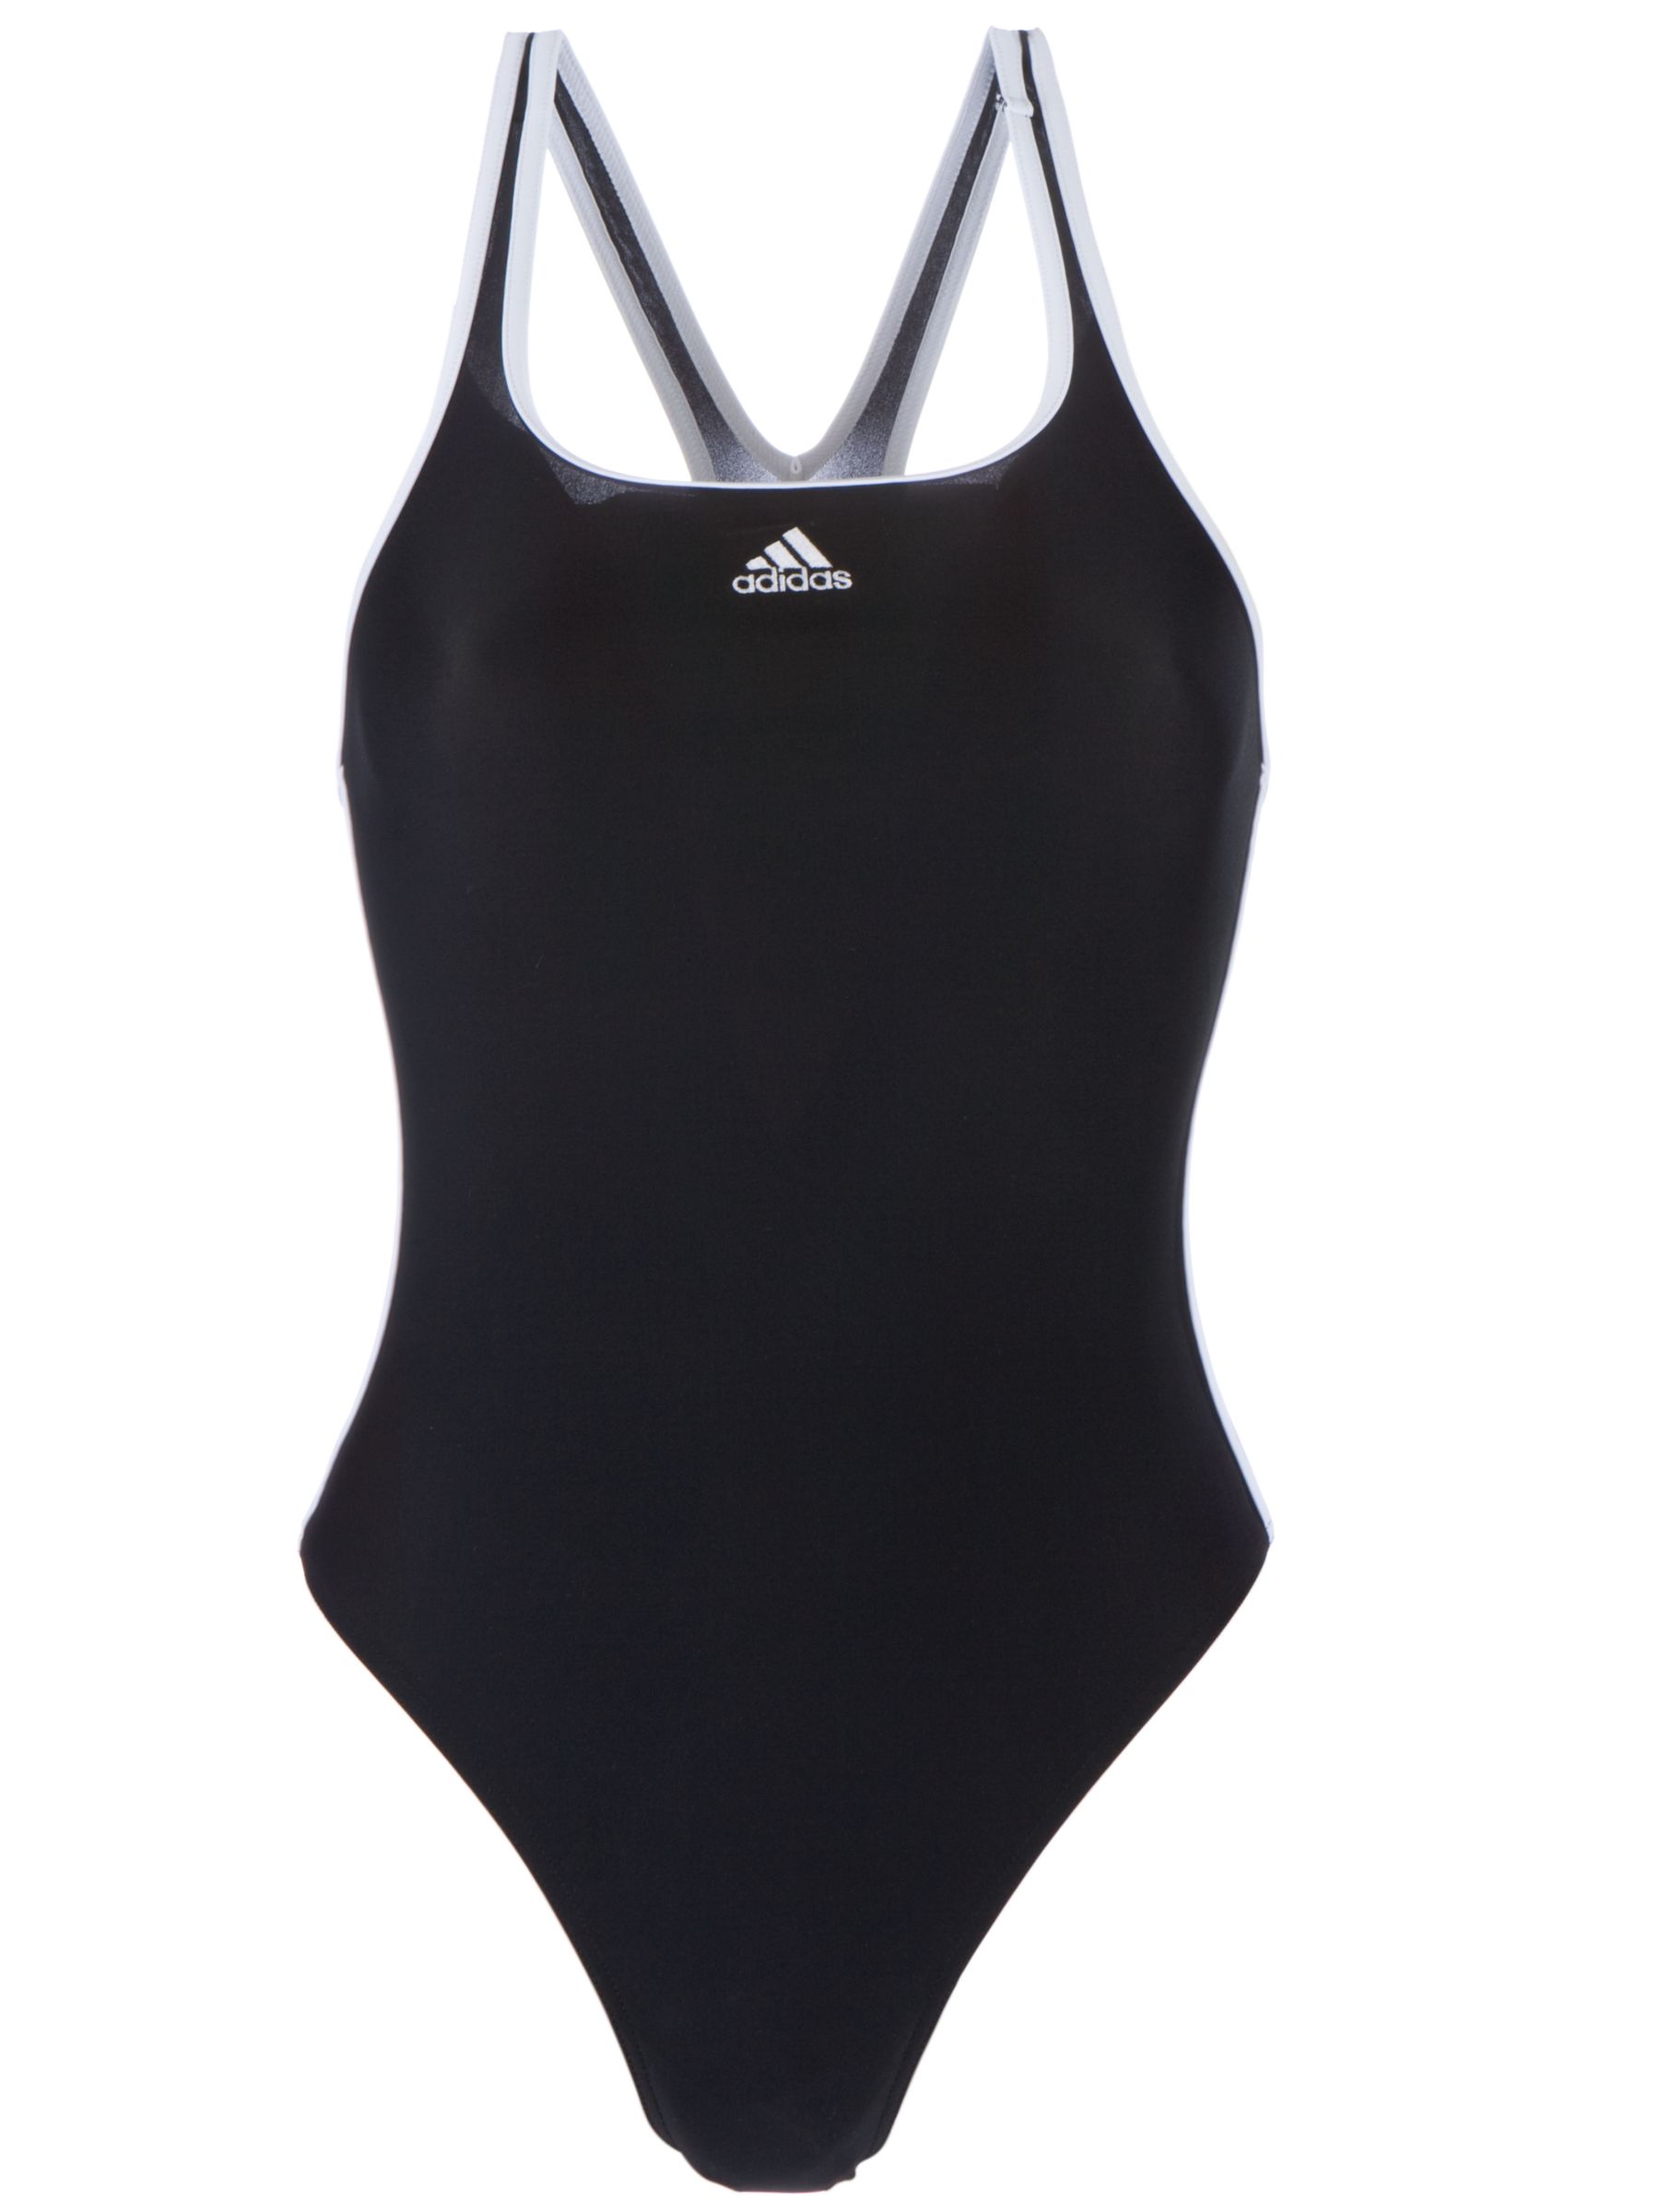 Adidas Womens 1 Piece Swimsuit, Black